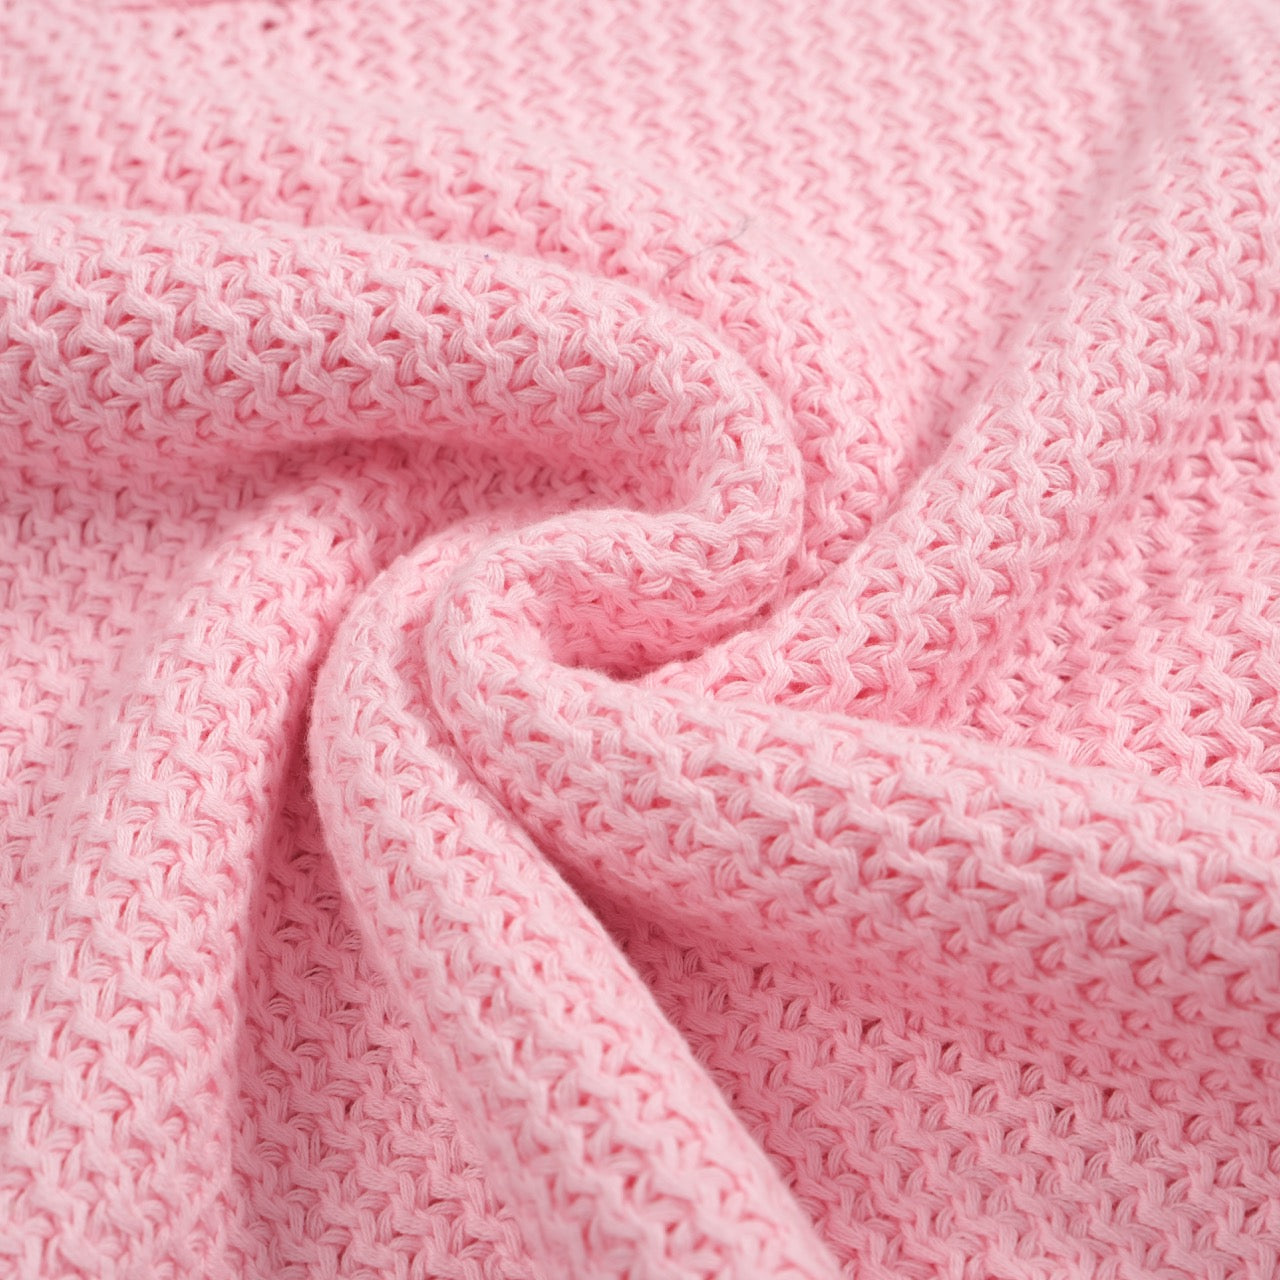 Men's pink knit V-neck Fashion polo